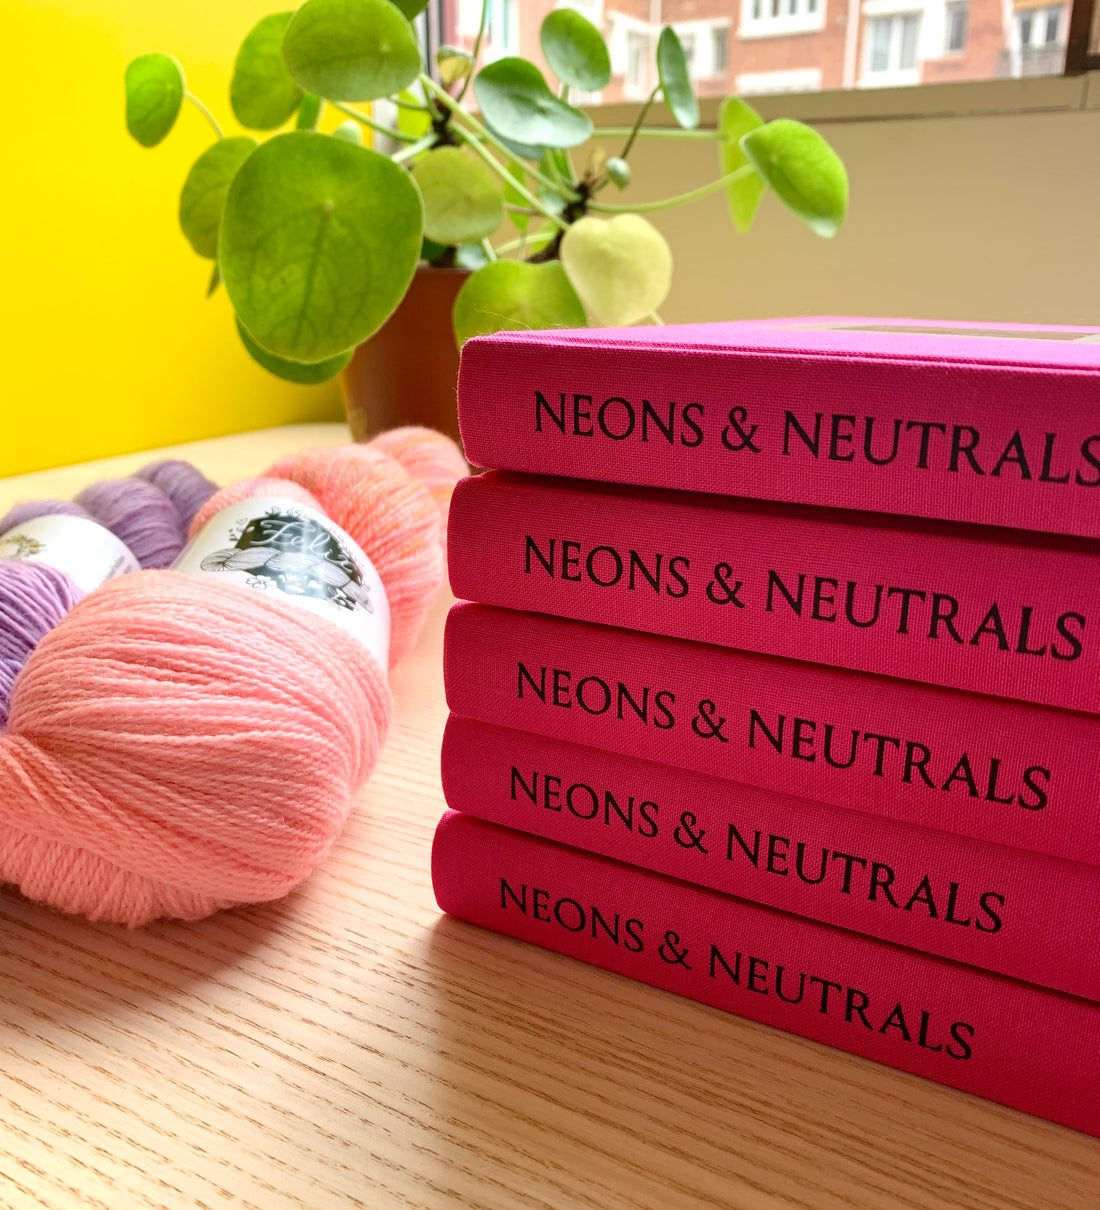 Neons & Neutrals is here!